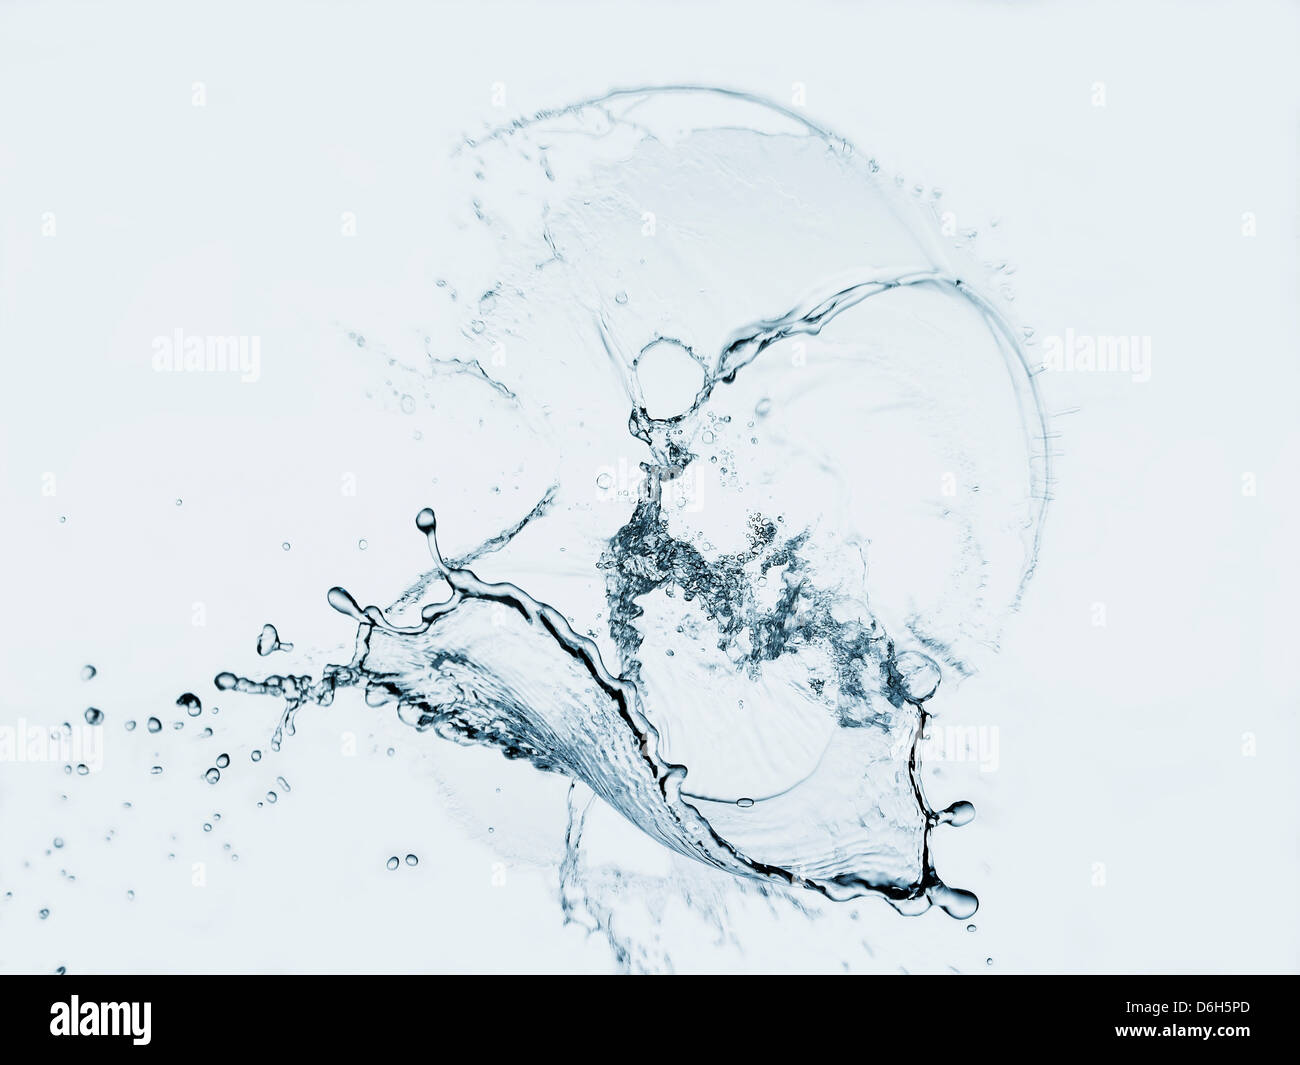 Water splashing in air Stock Photo